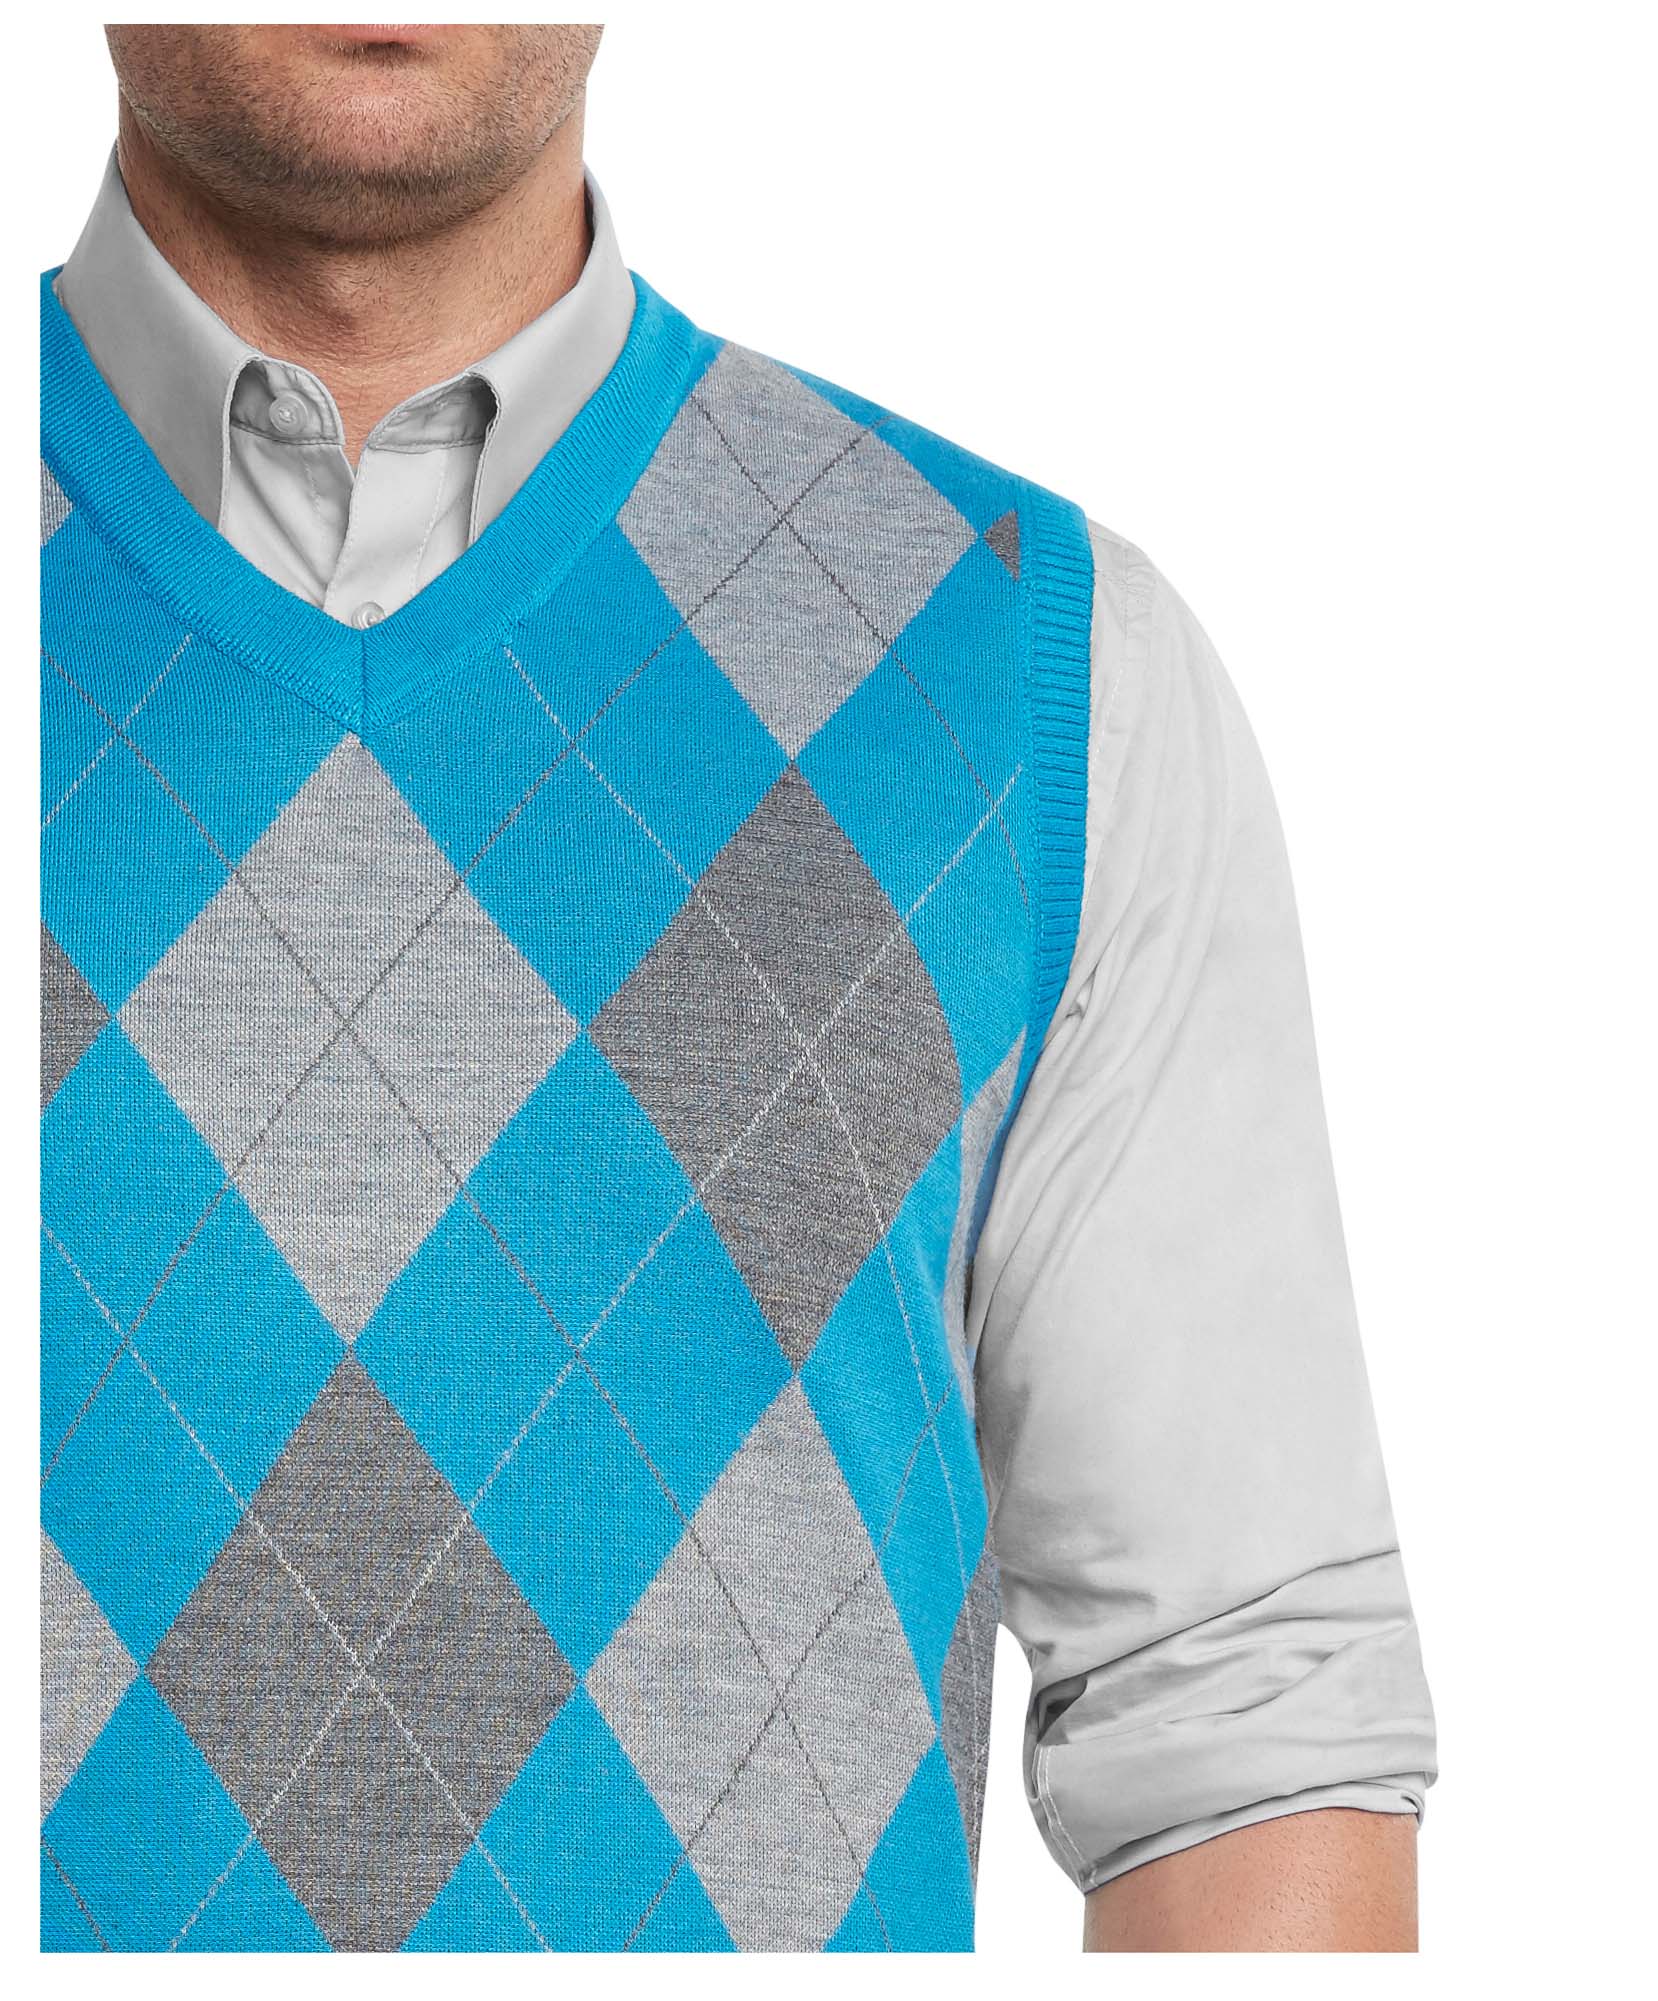 True Rock Men's Argyle V-Neck Sweater Vest (Turquoise/Gray, X-Large) - image 2 of 4